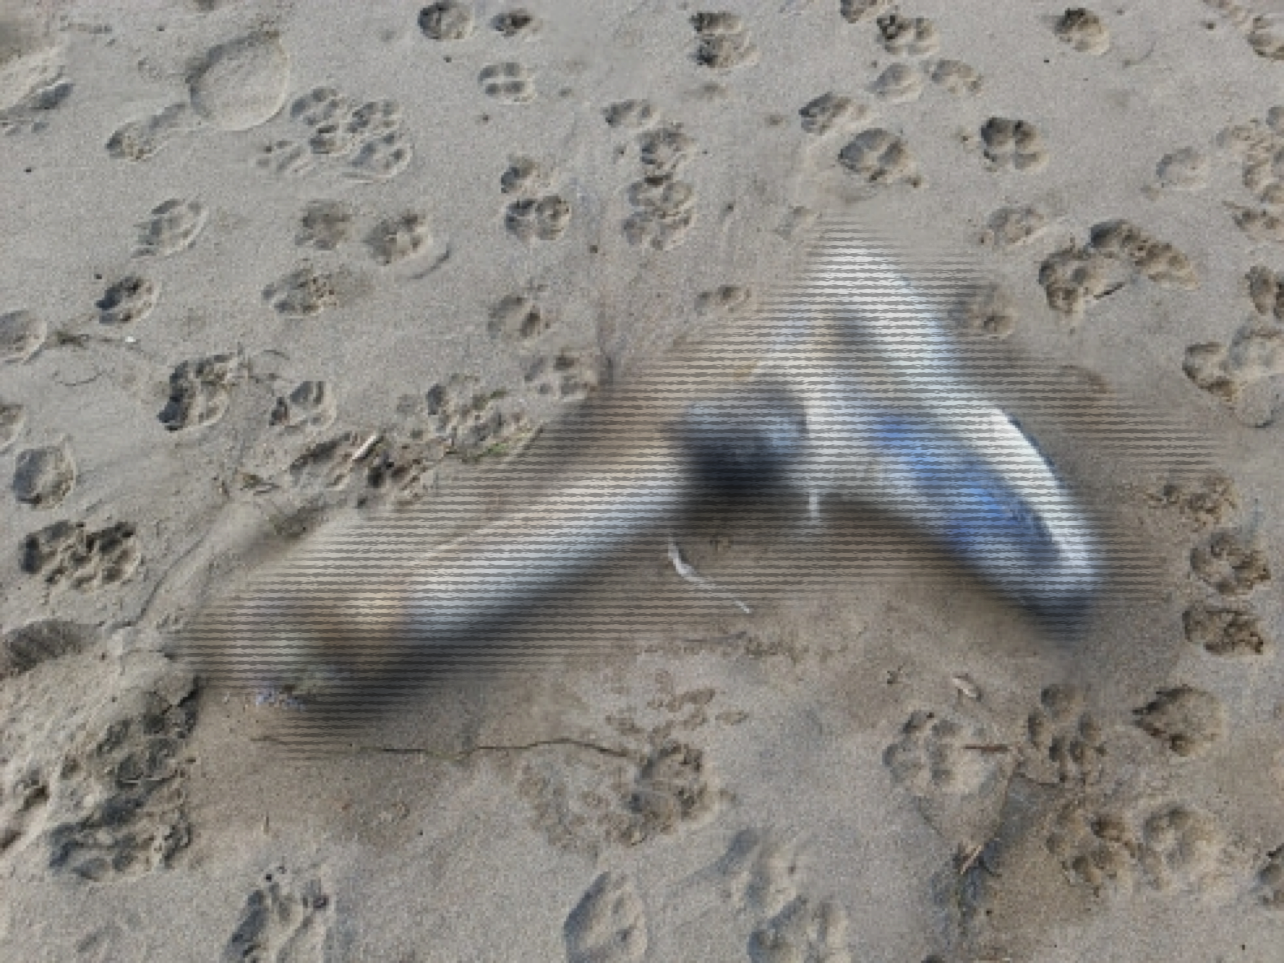 Scoperti resti umani sulla spiaggia: aperta indagine